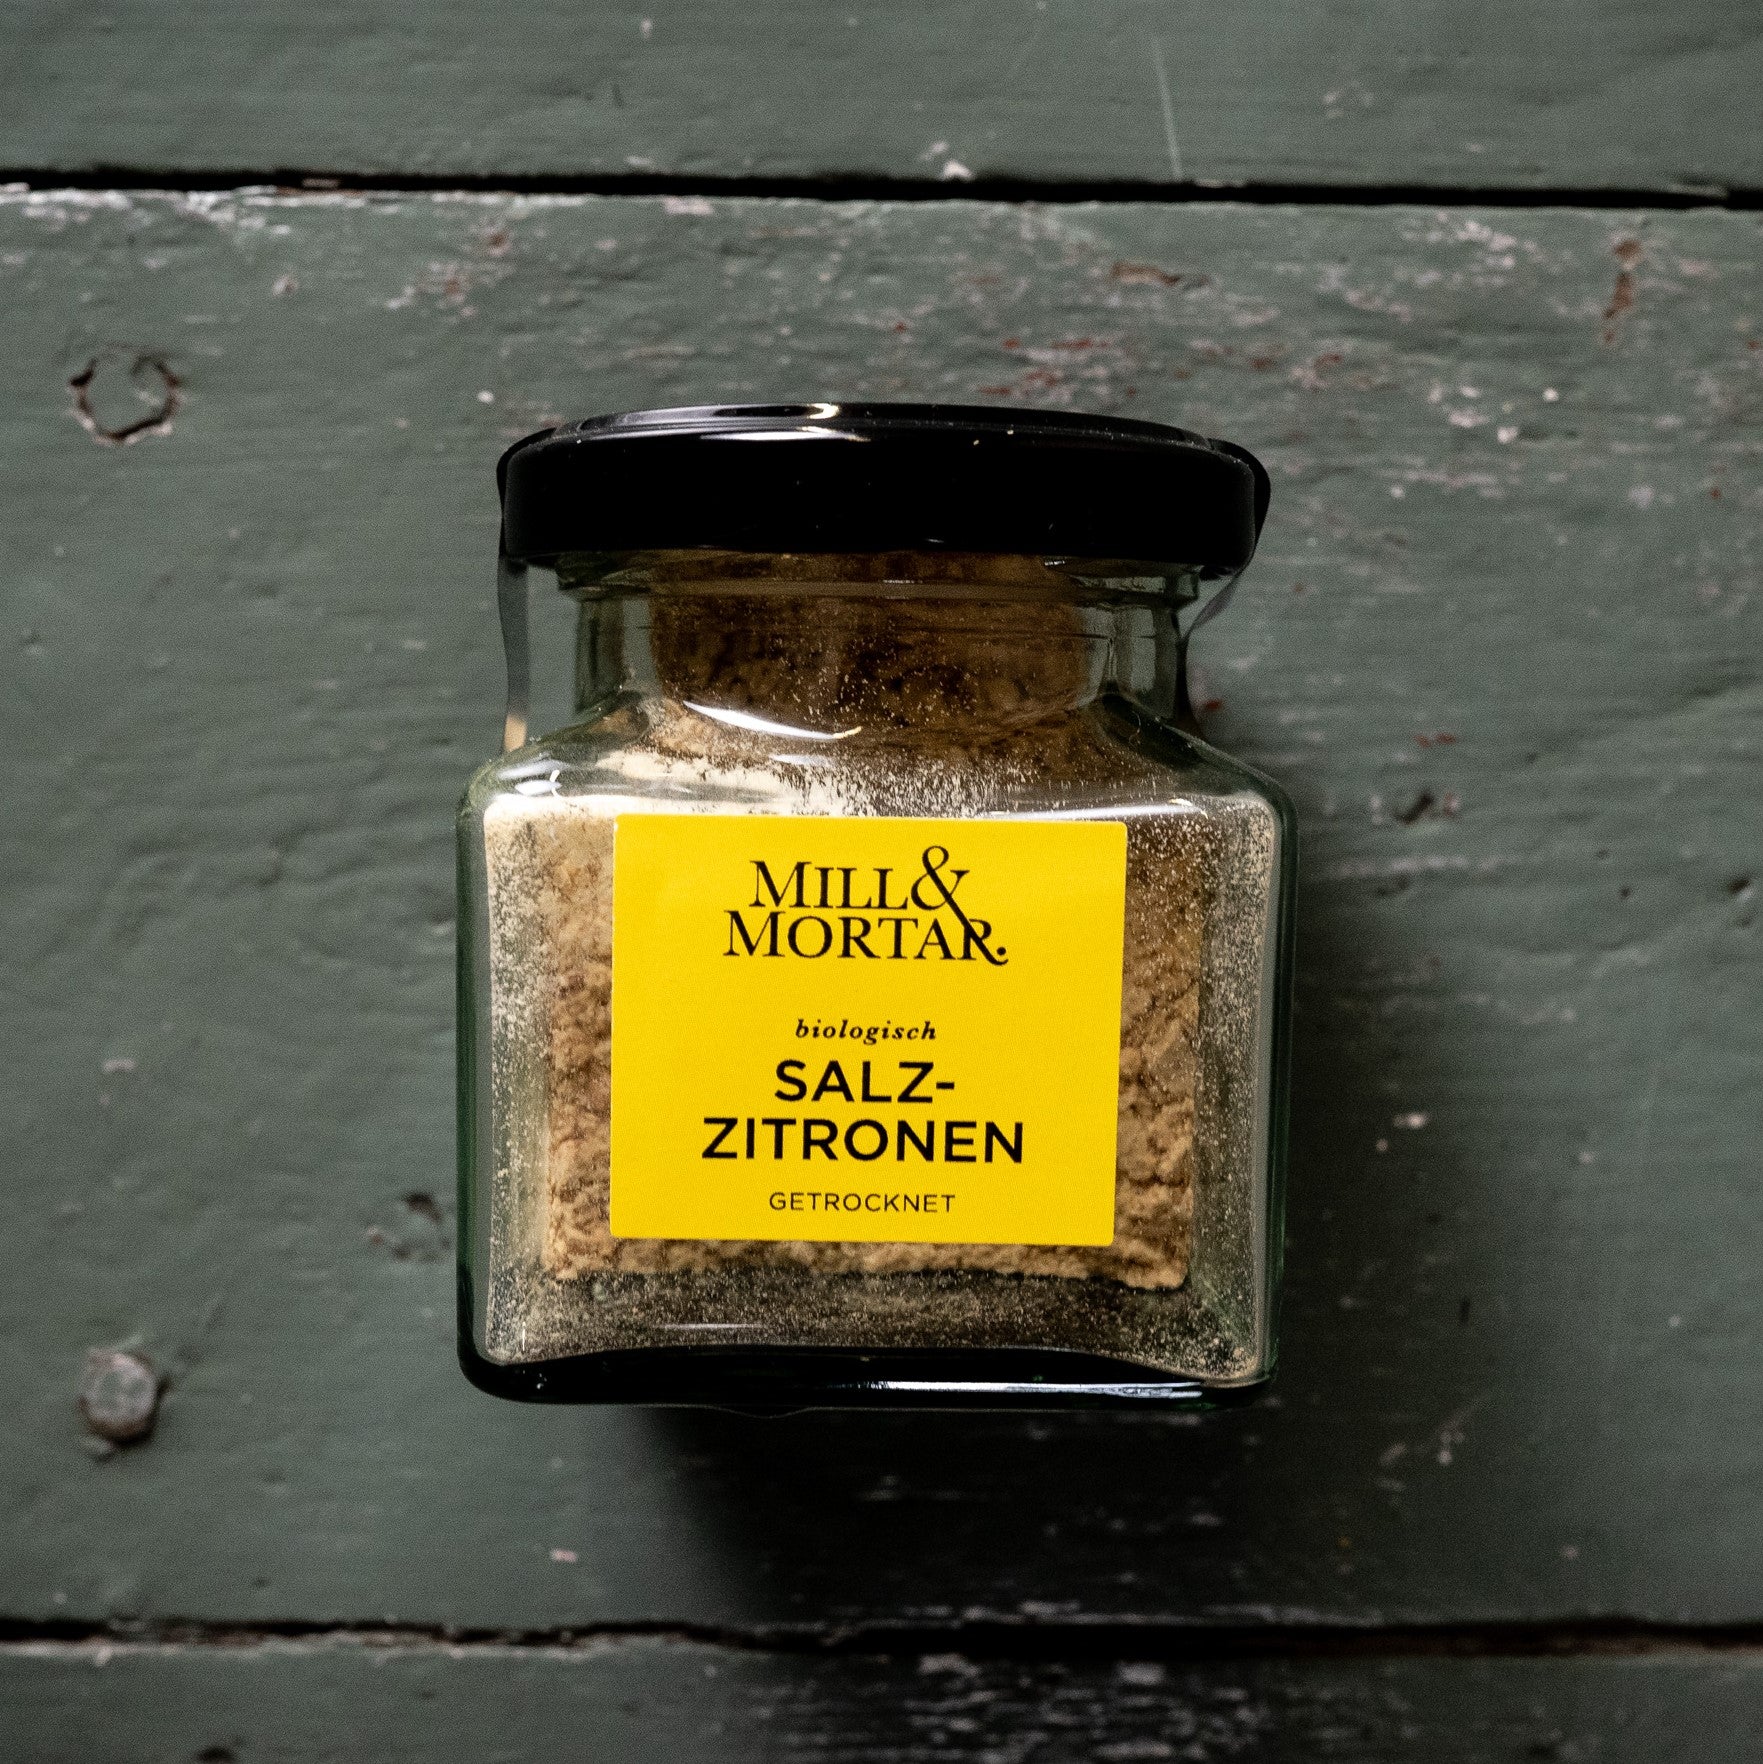 Salz-Zitronen gerieben (Mill & Mortar Gewürz)